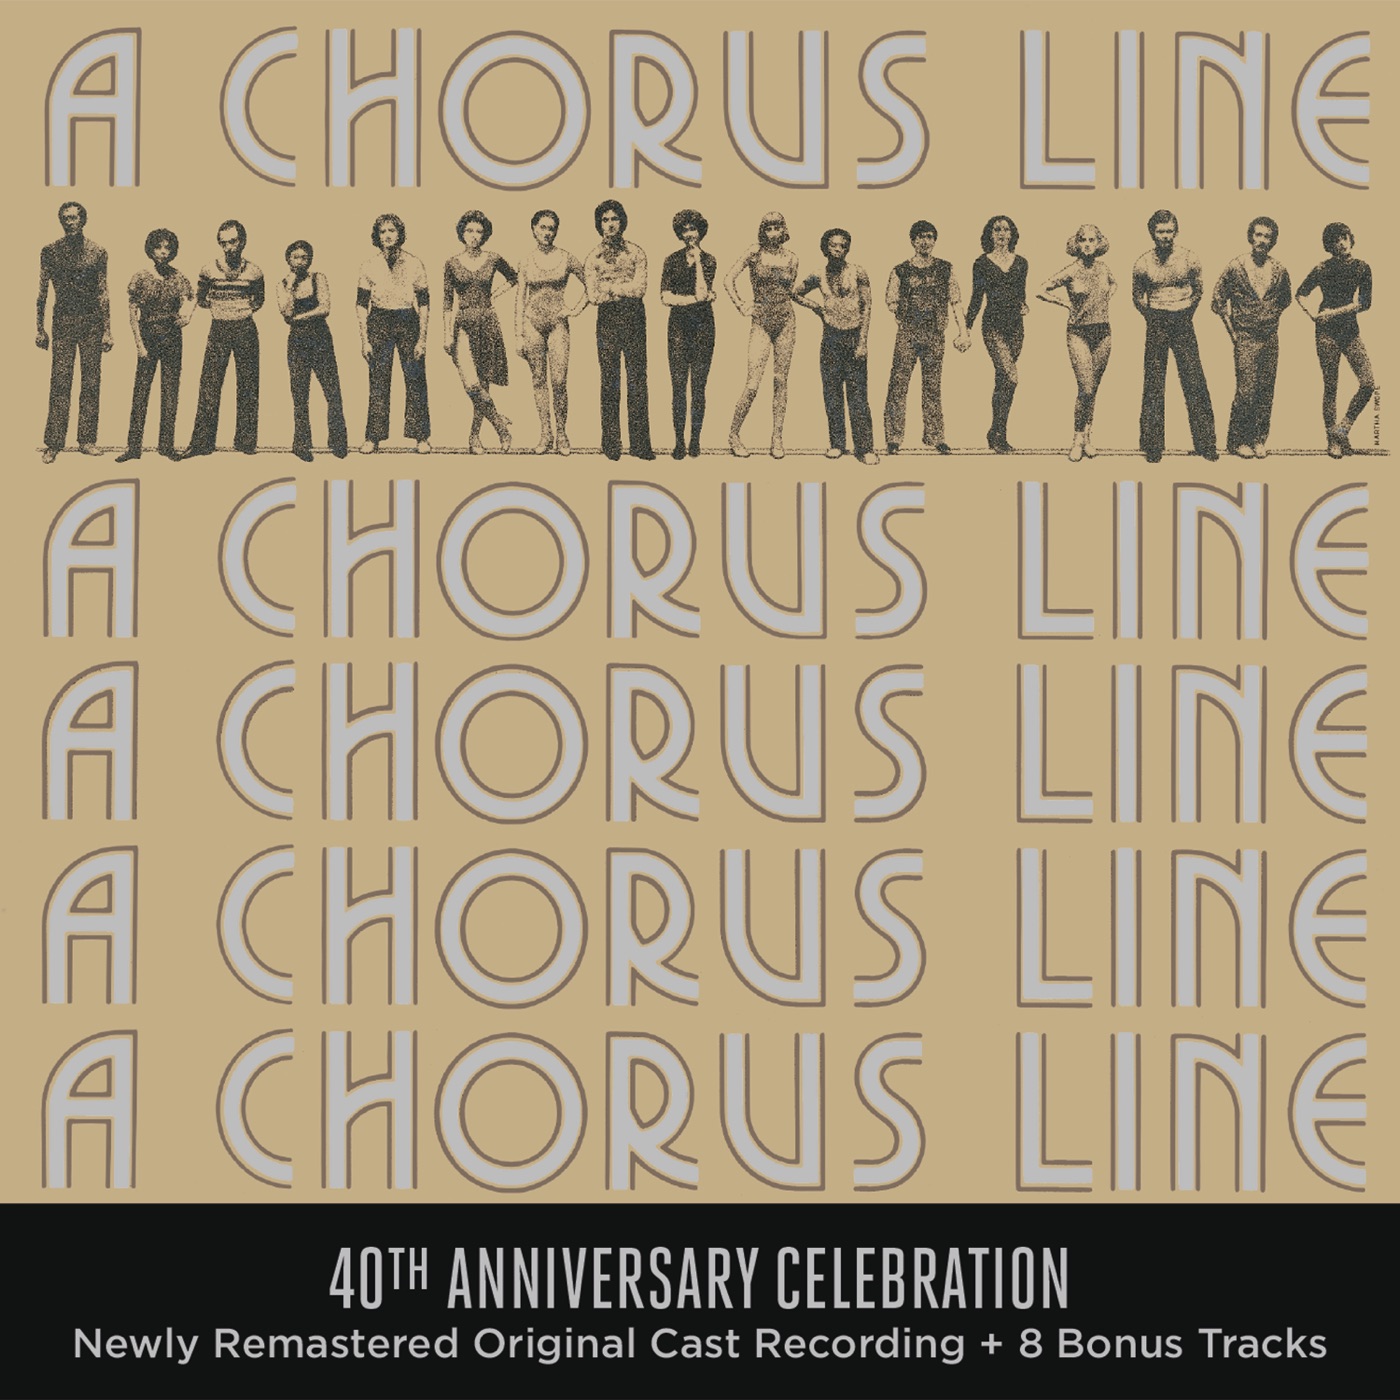 A Chorus Line - 40th Anniversary Celebration (Original Broadway Cast Recording) by Original Broadway Cast of A Chorus Line, Marvin Hamlisch